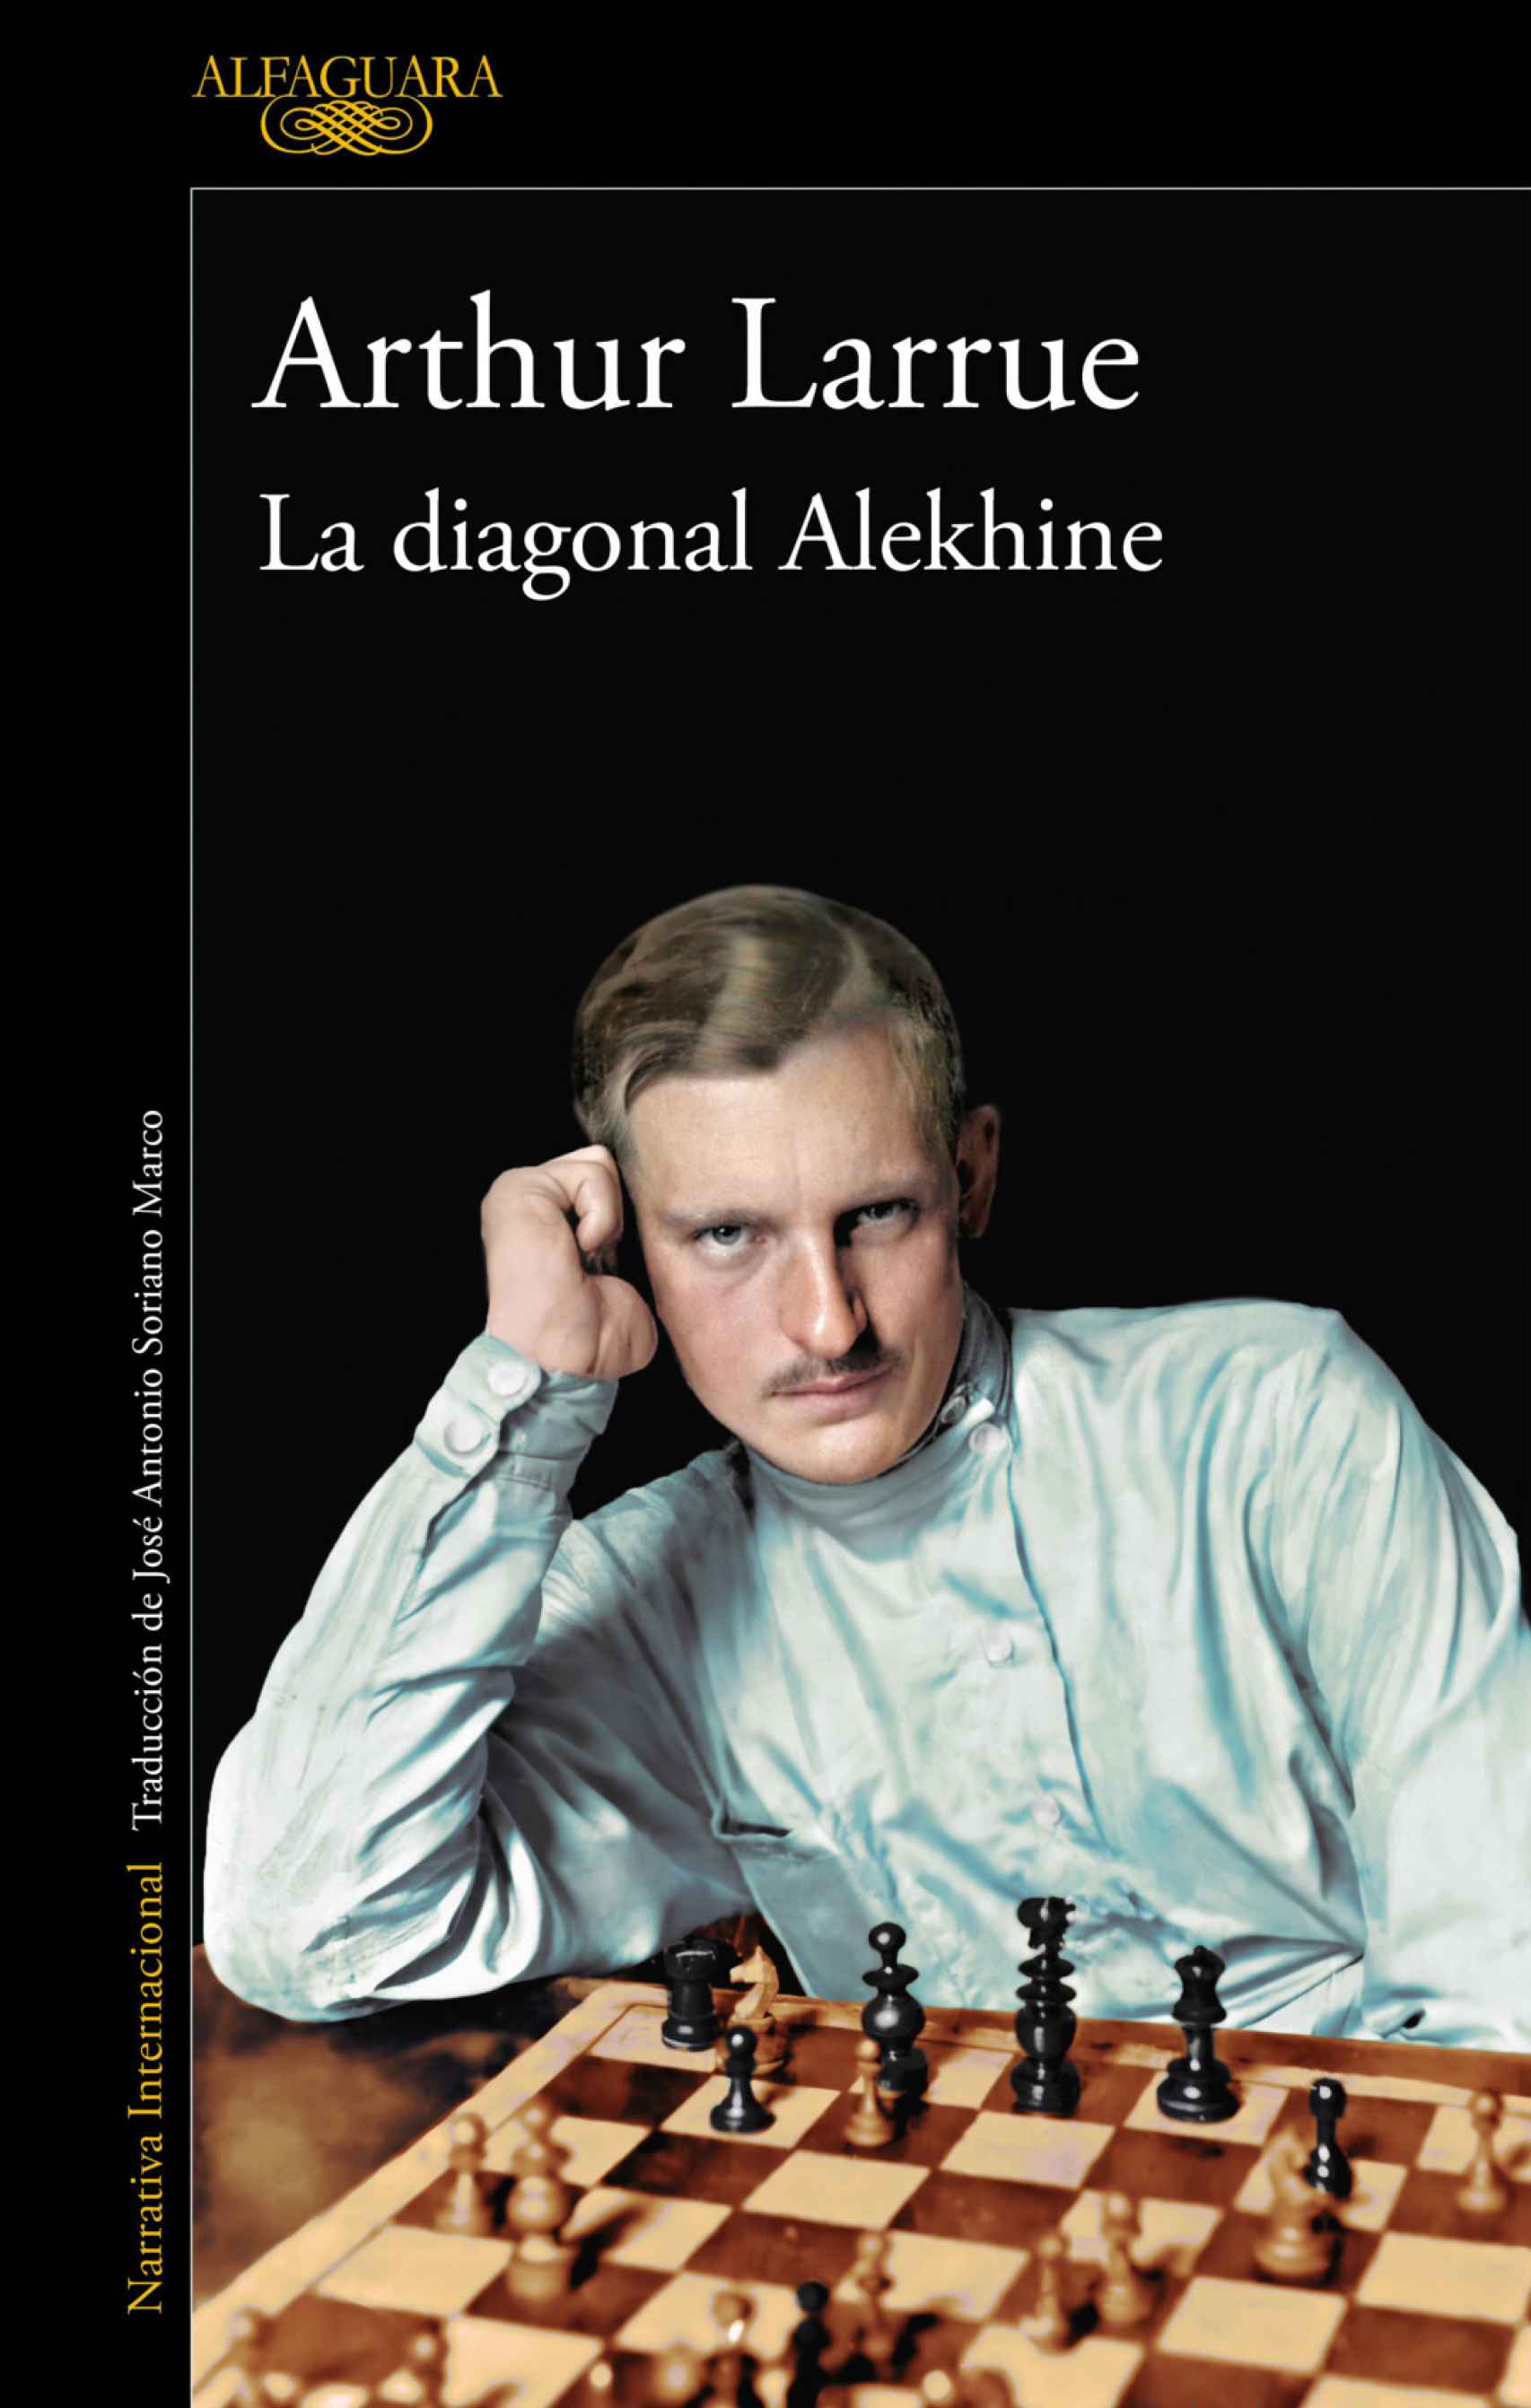 Portada de 'La diagonal Alekhine'.